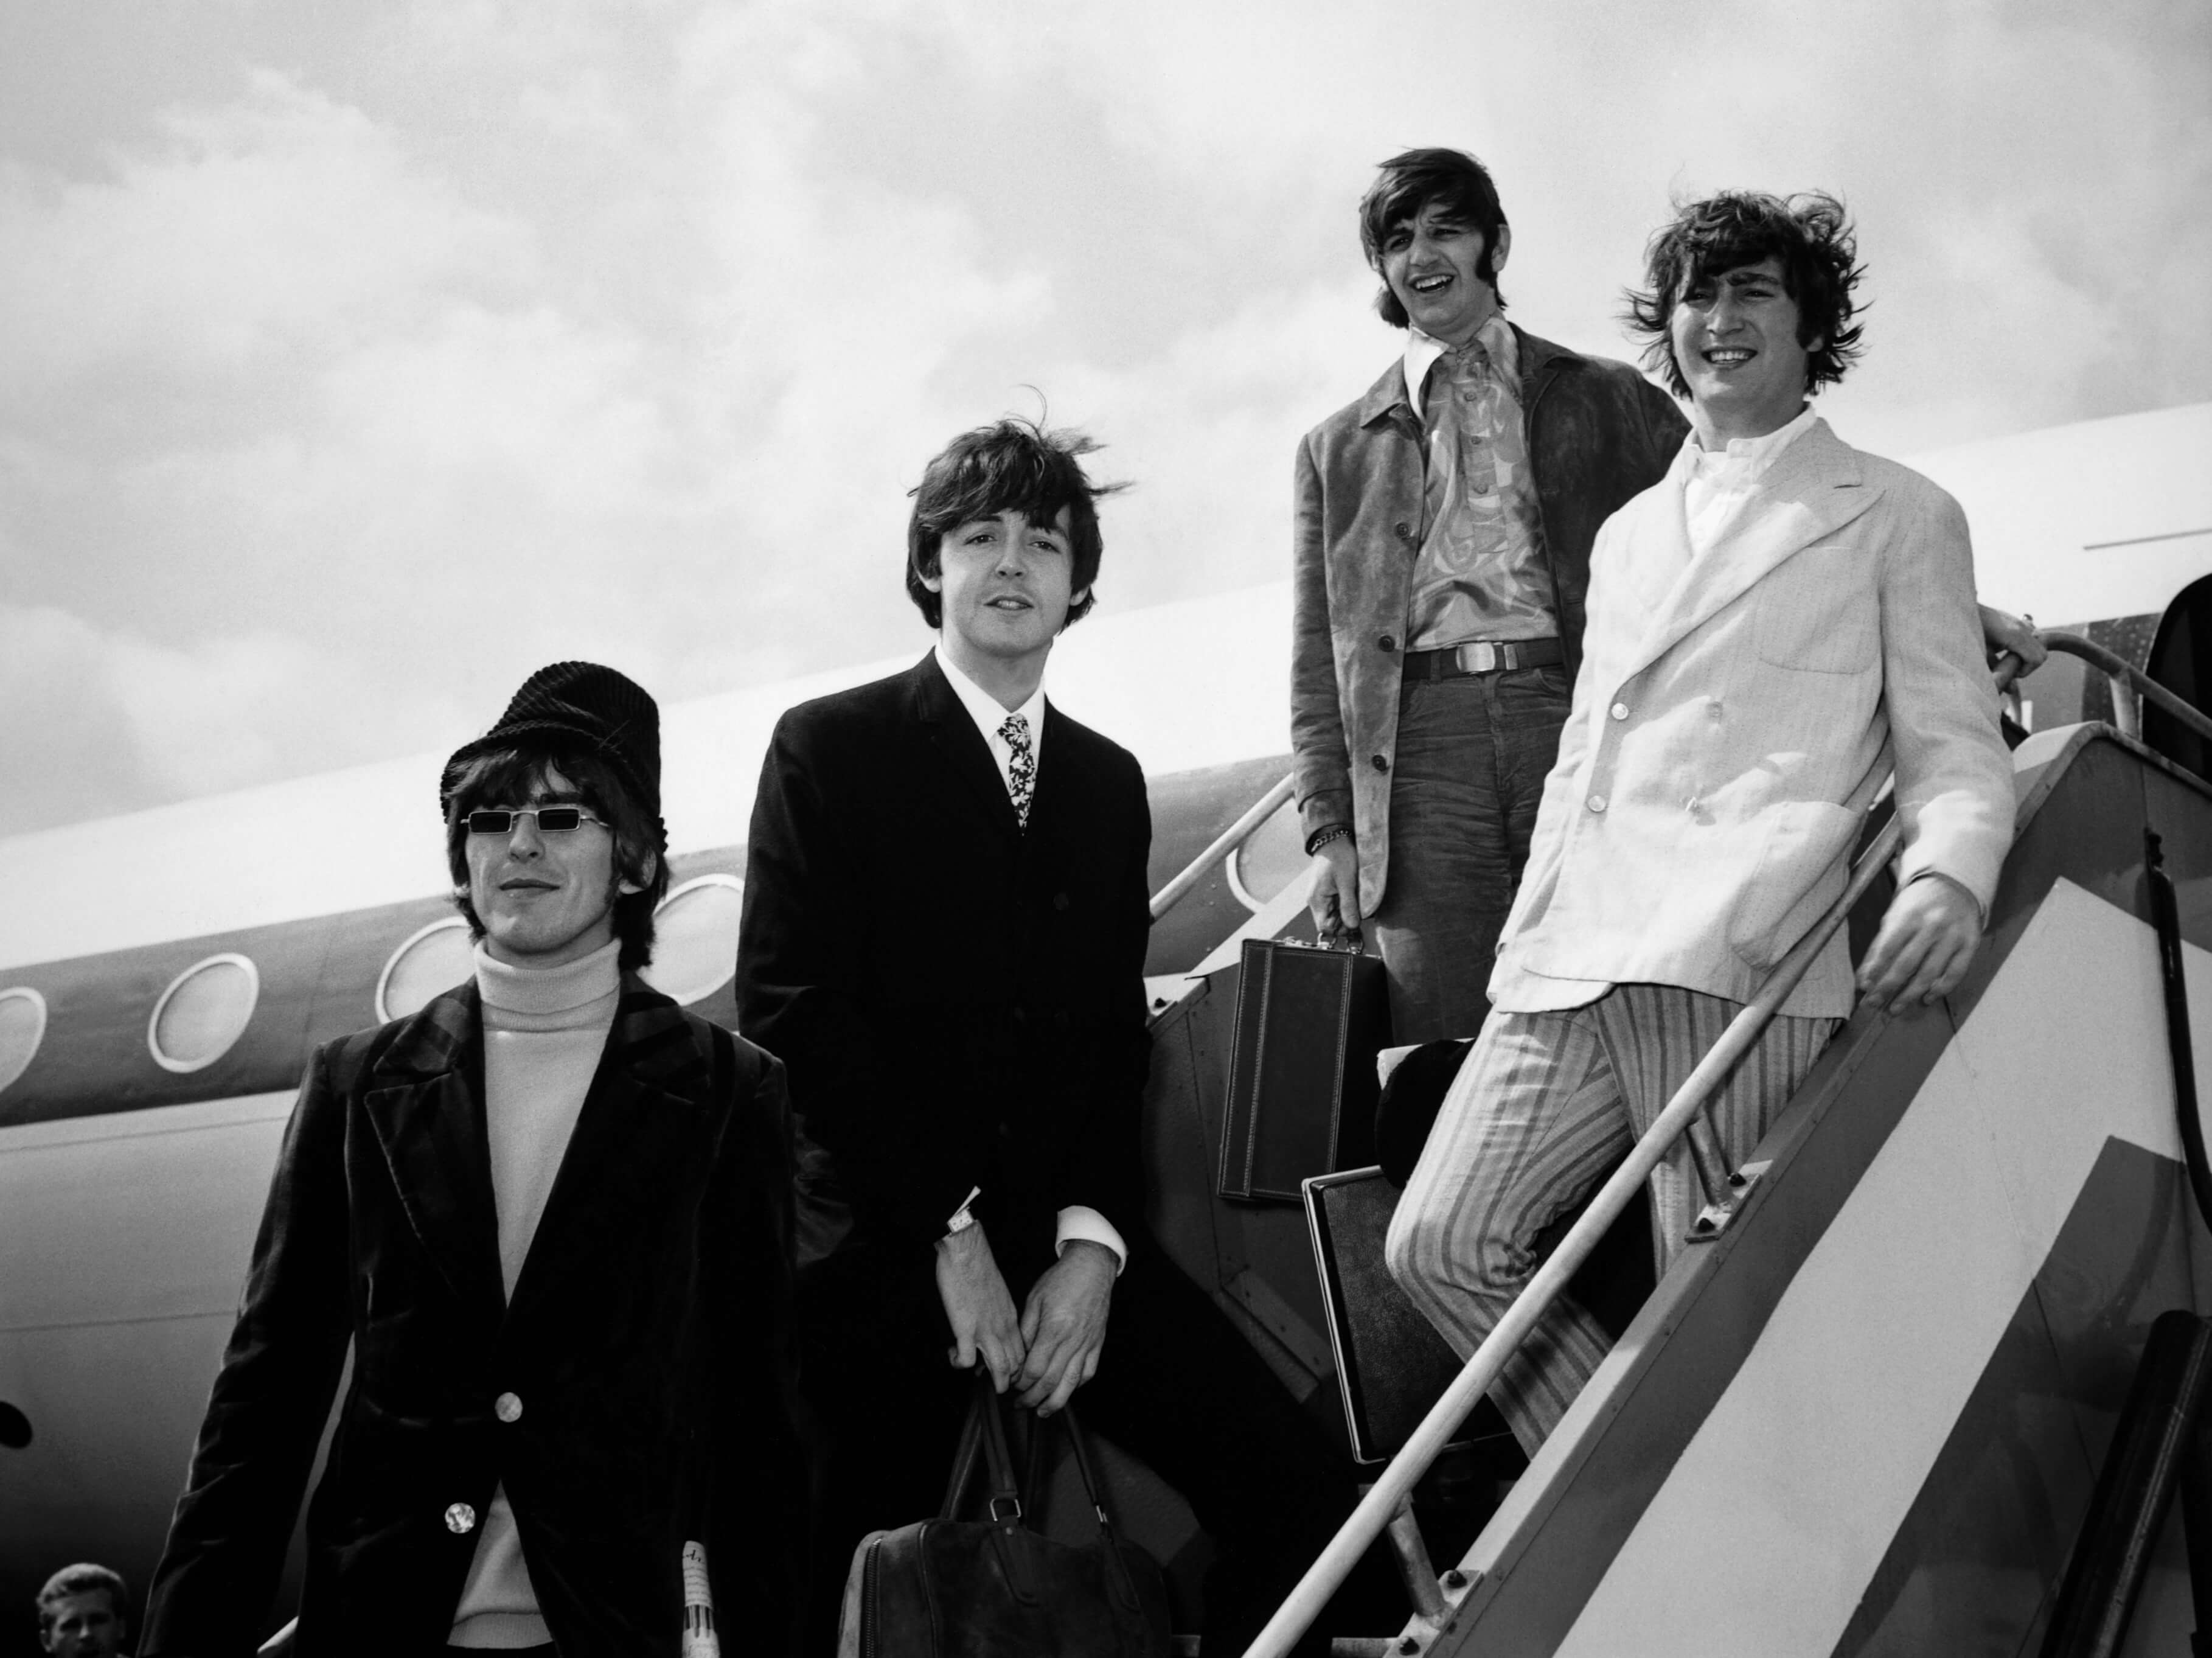 Beatles members (from left) George Harrison, Paul McCartney, Ringo Starr, and John Lennon walk off an airplane in 1966.